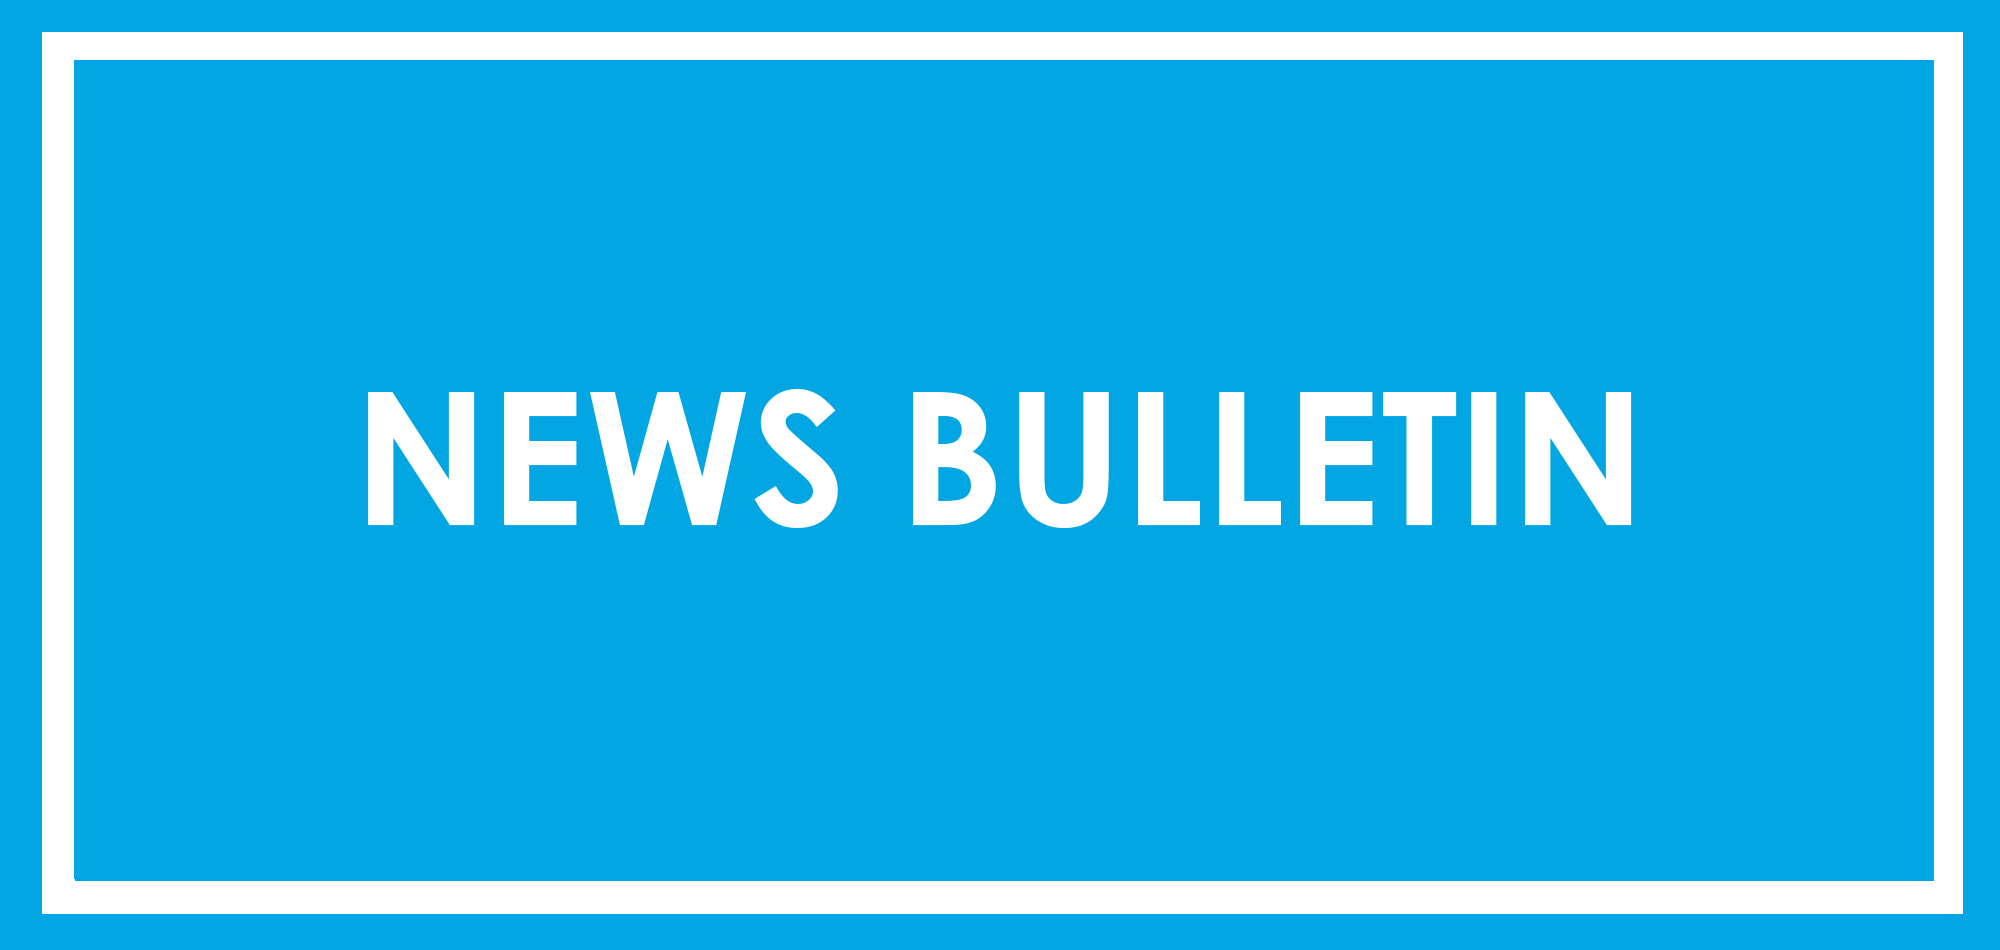 News Bulletin - 12.01.2021